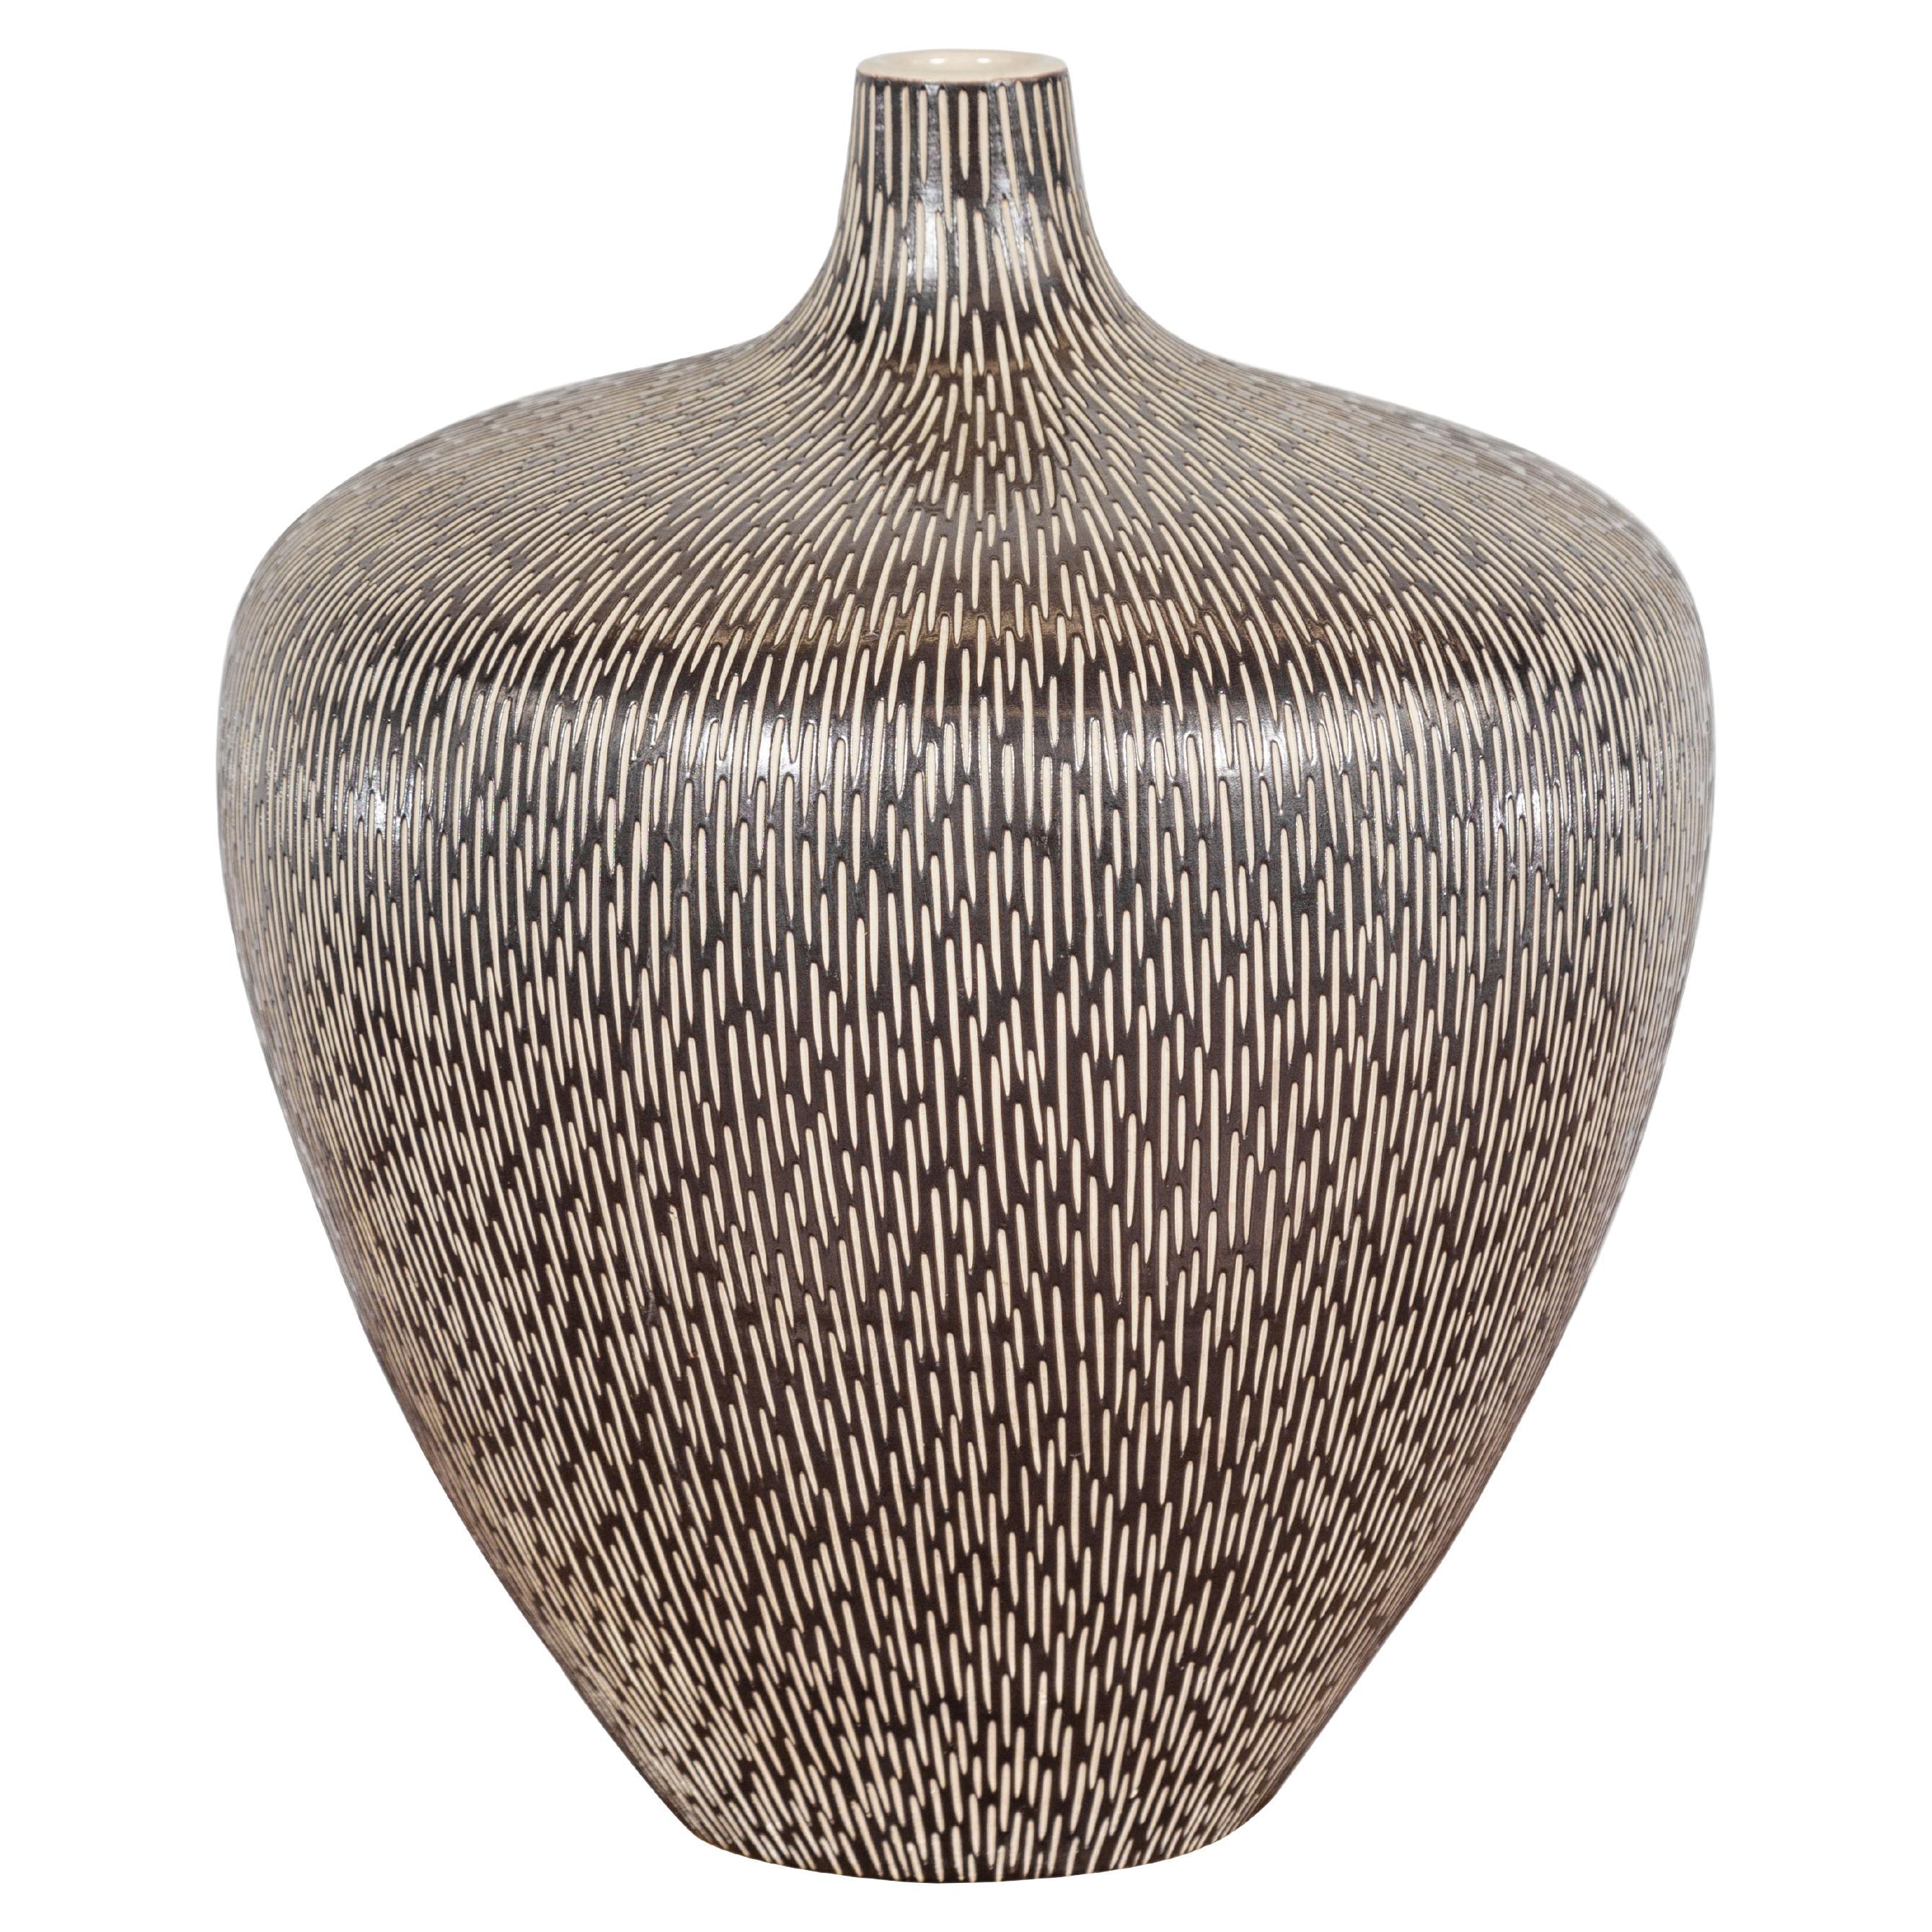 Artisan Handmade Brown Glazed Ceramic Vase with Textured Cream Stokes For Sale